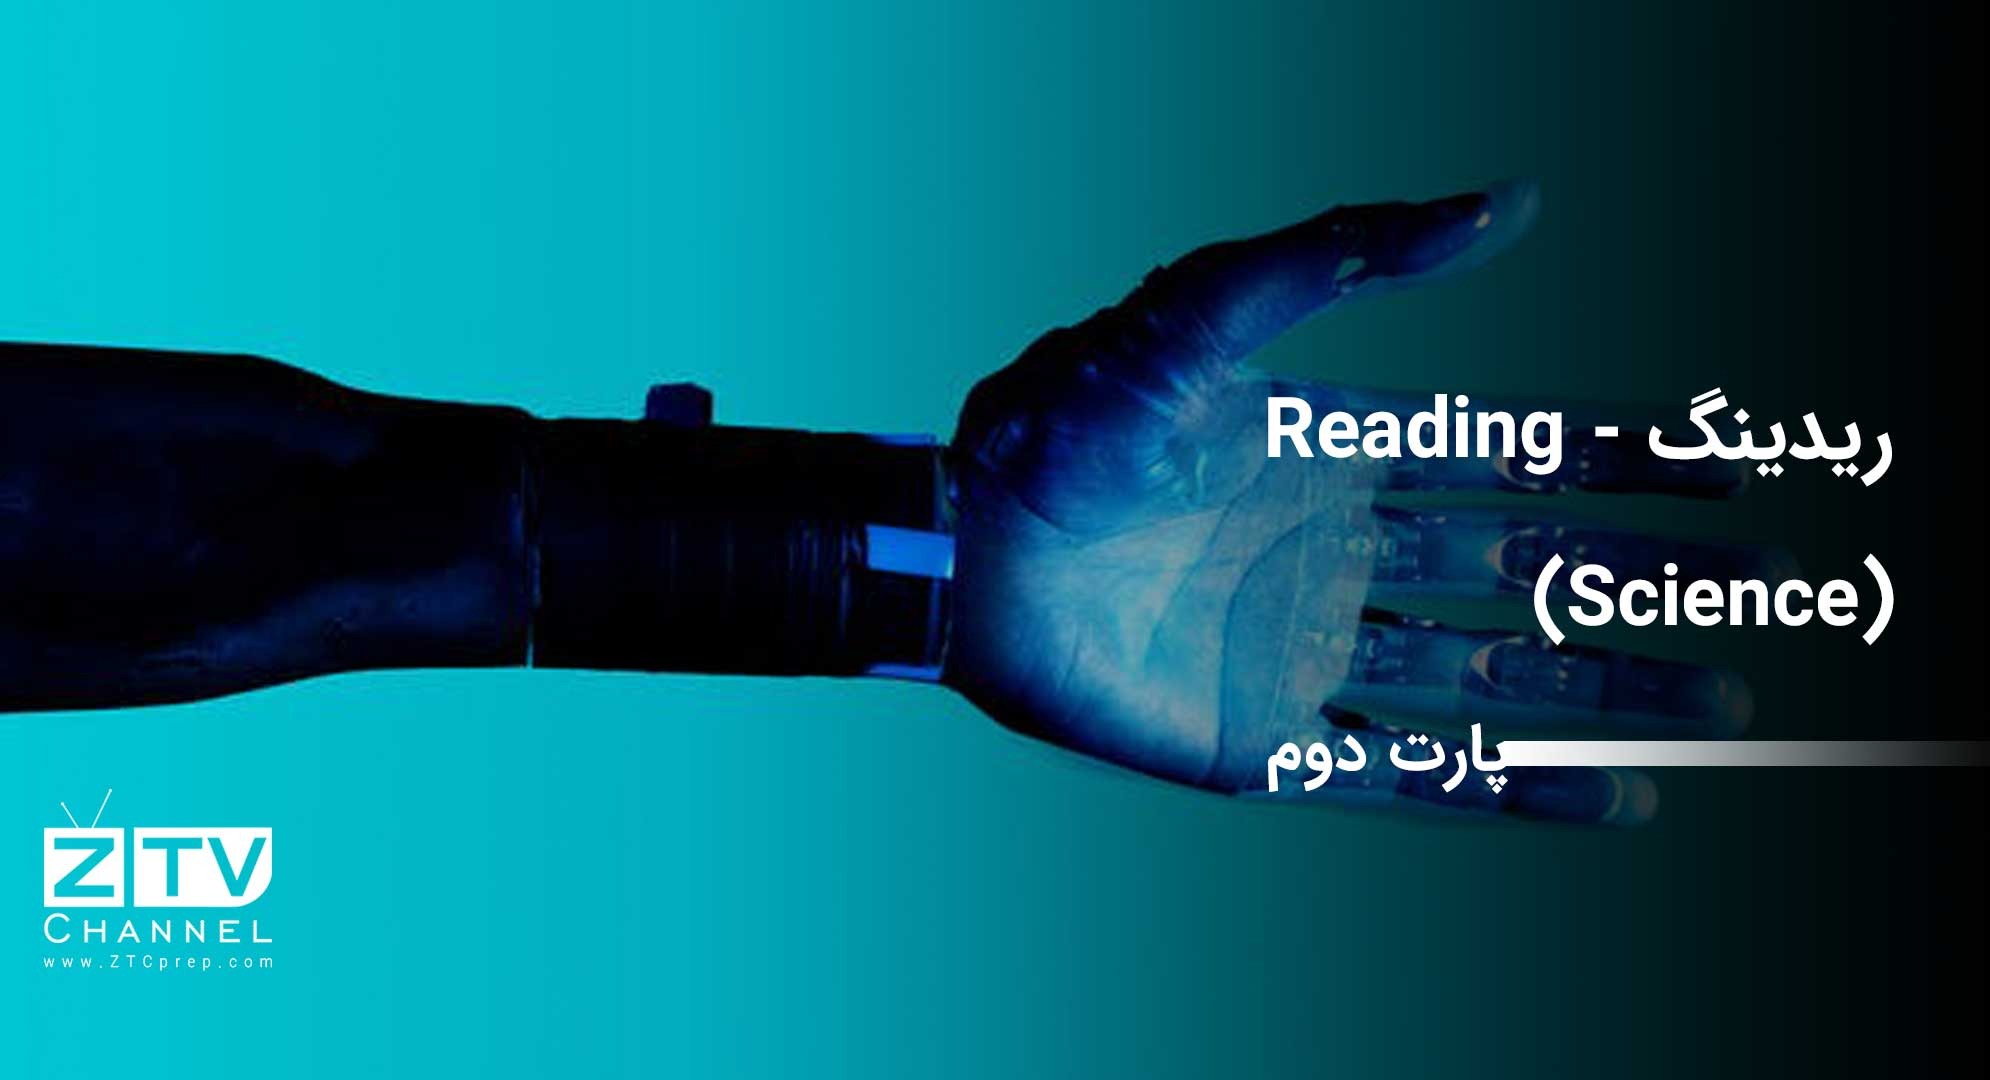 ریدینگ - Reading (Science) – پارت دوم